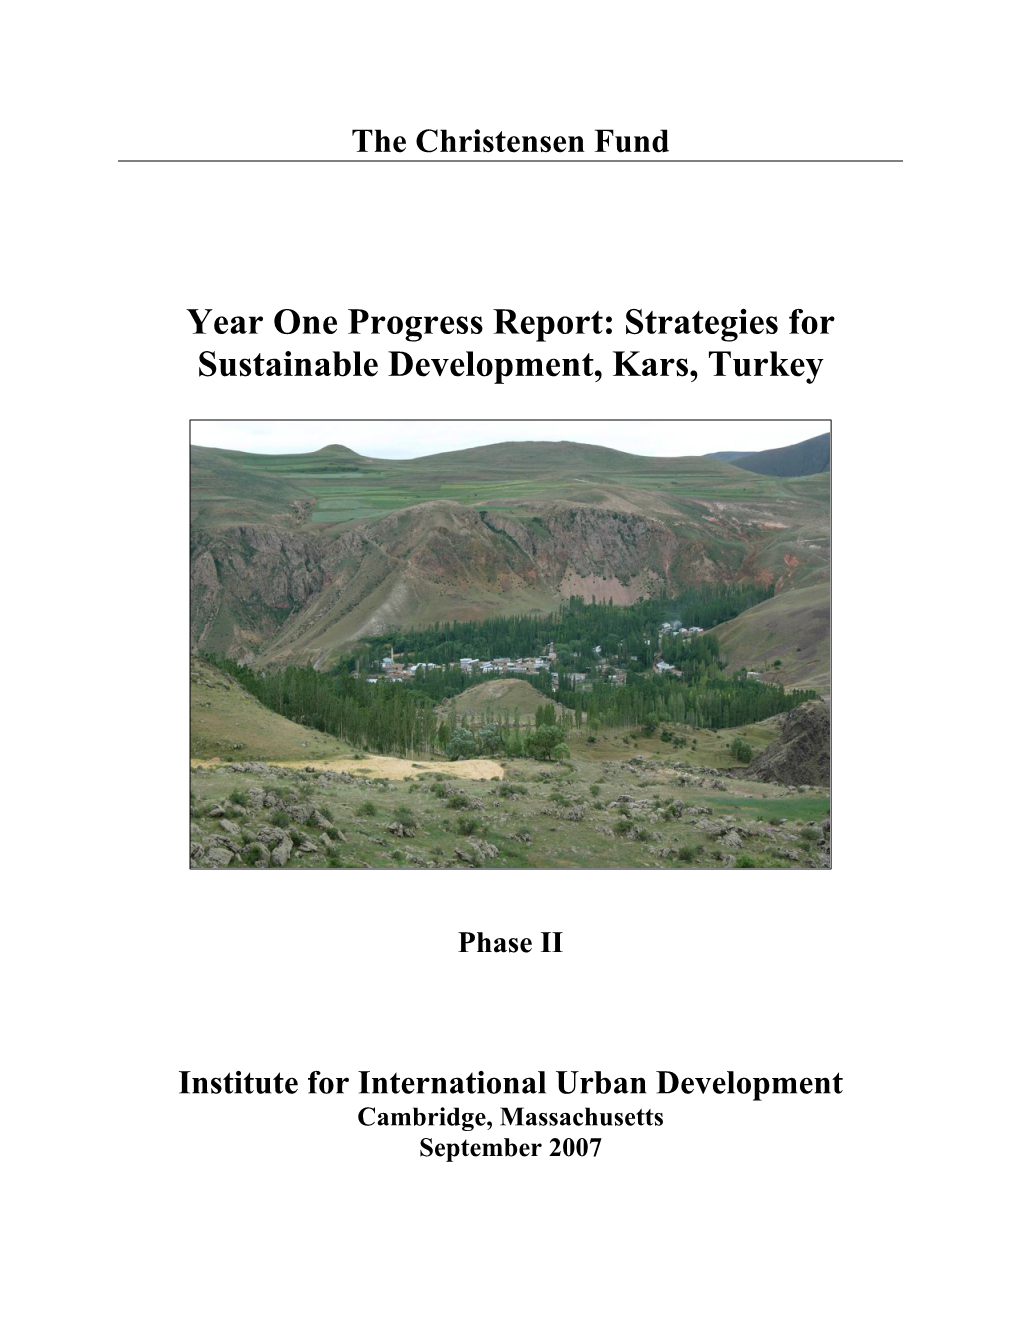 Year One Progress Report: Strategies for Sustainable Development, Kars, Turkey